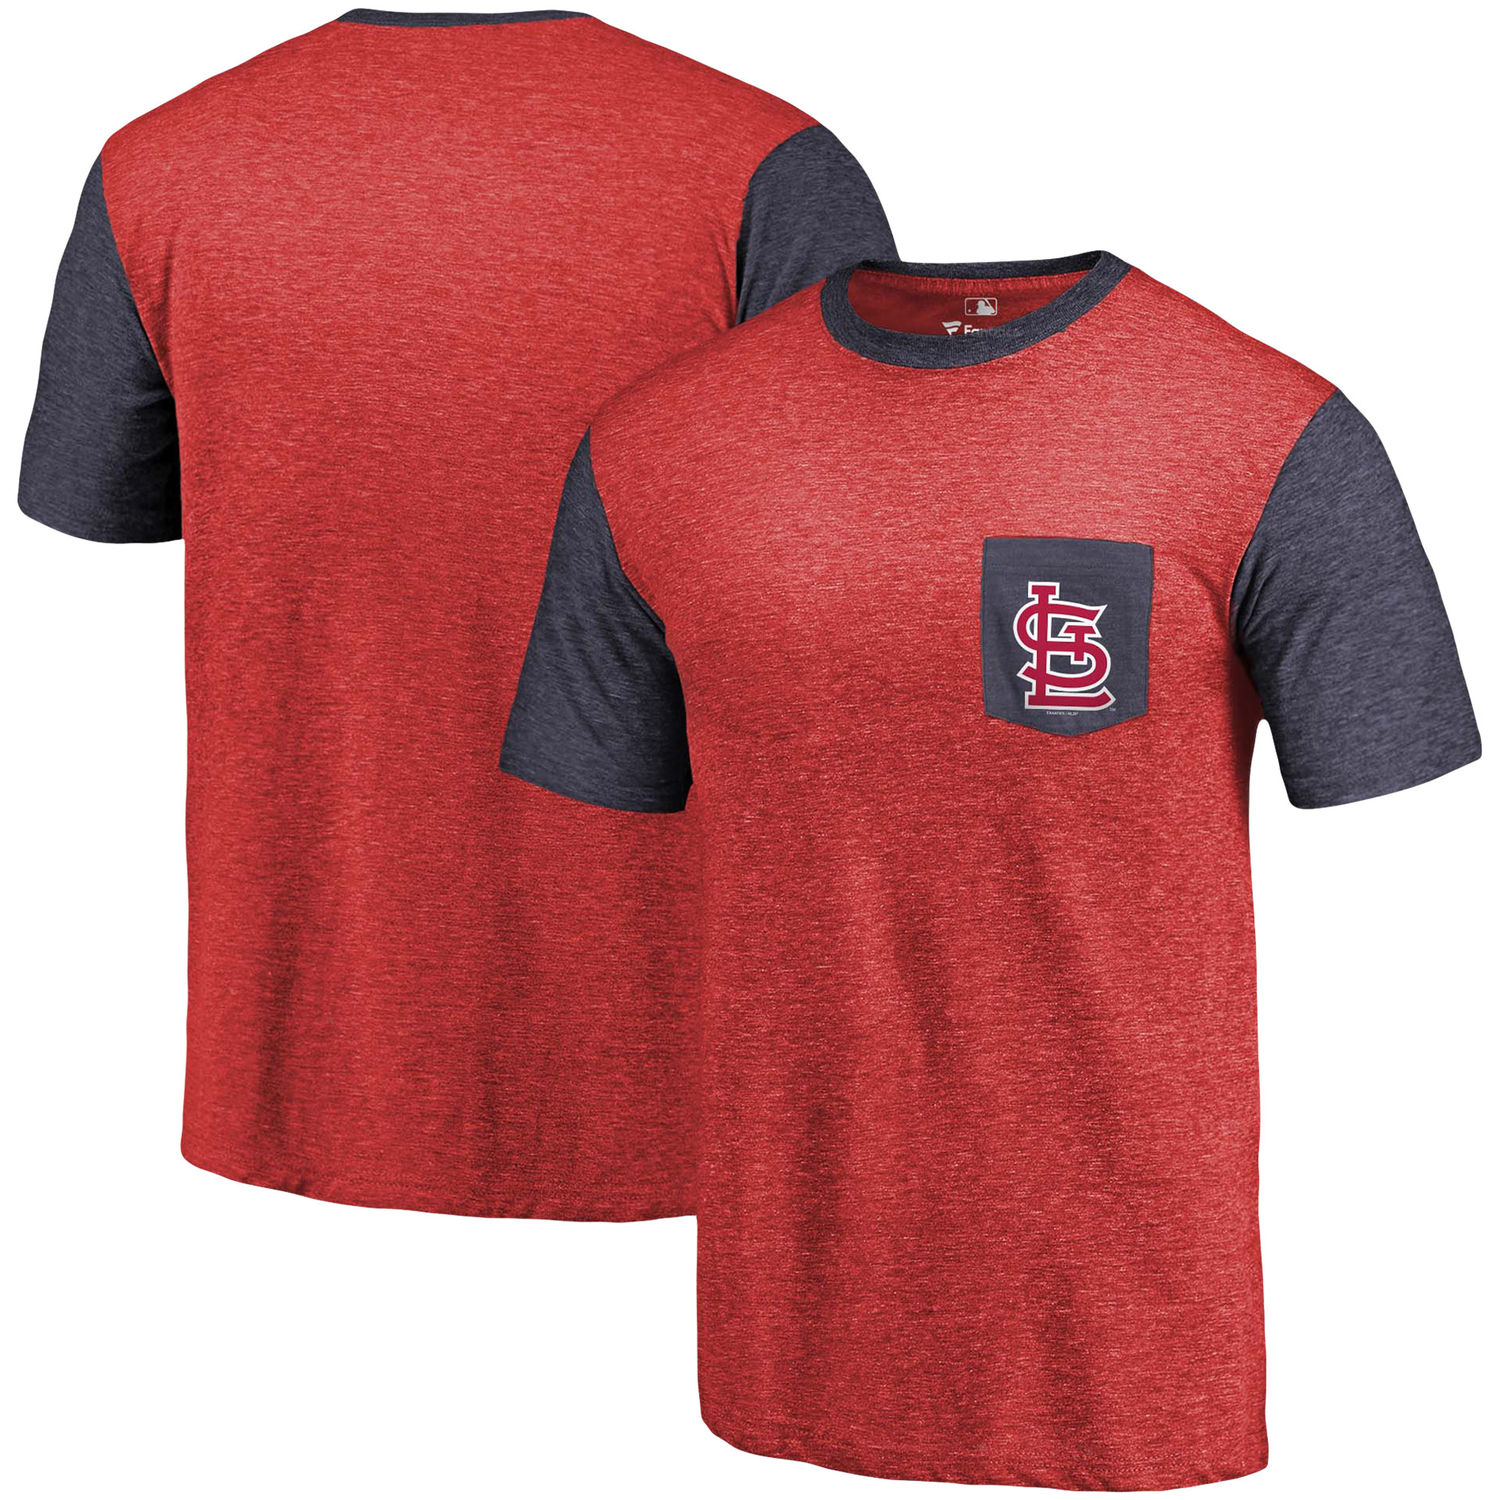 Men's St. Louis Cardinals Fanatics Branded Red/Navy Refresh Pocket T-Shirt